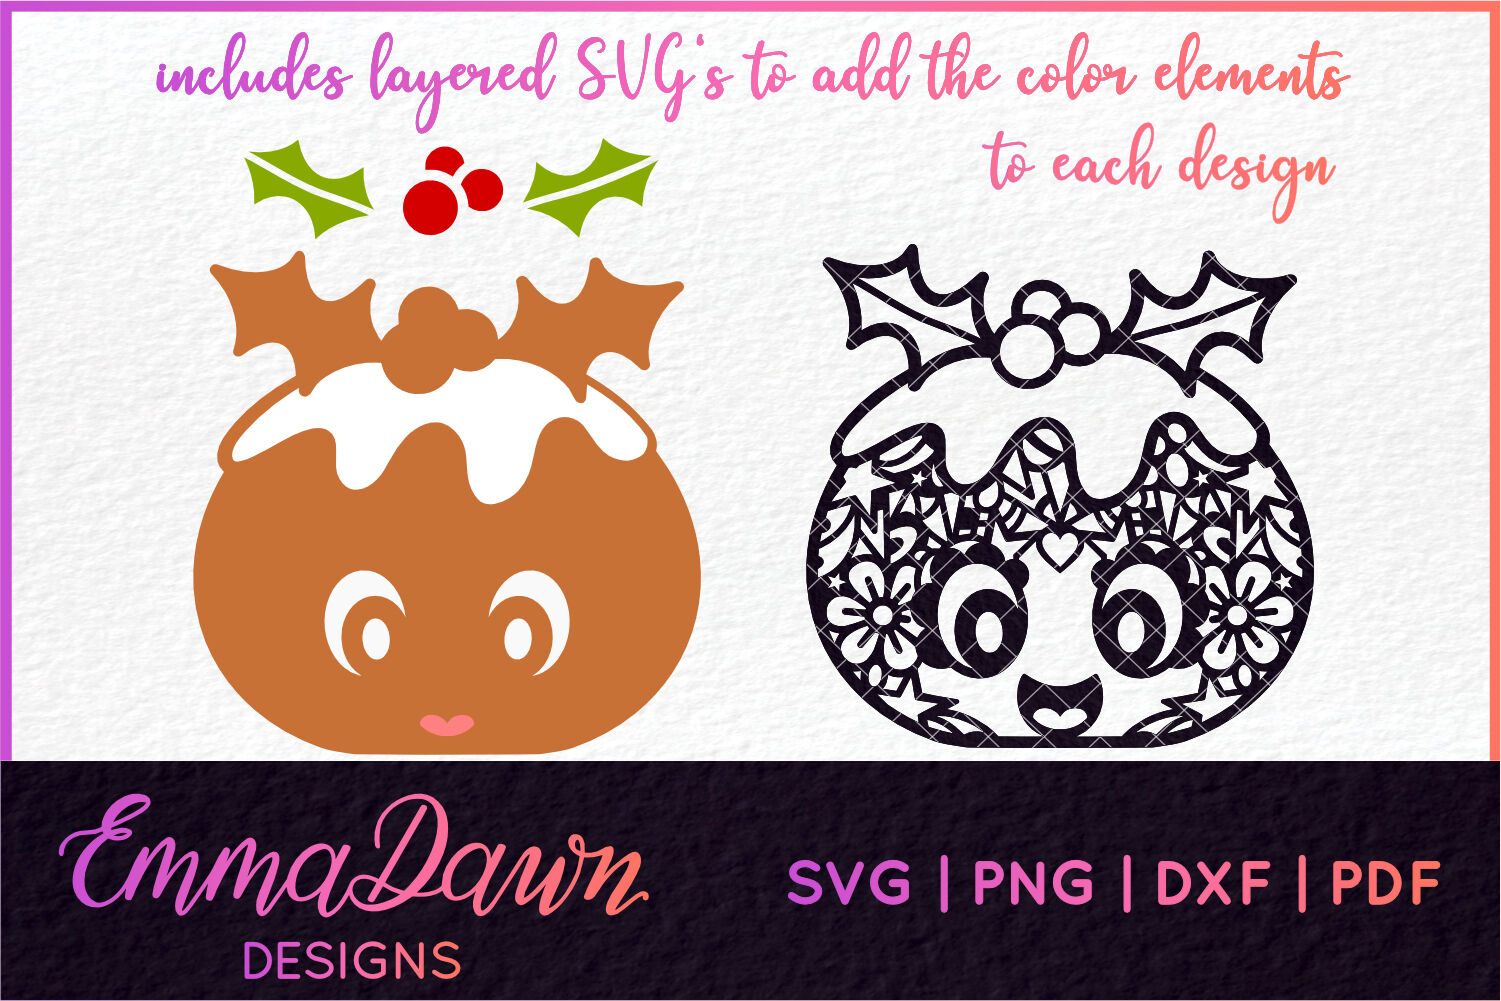 Download Brandy The Christmas Pudding Svg Mini Bundle 6 Designs By Emma Dawn Designs Thehungryjpeg Com